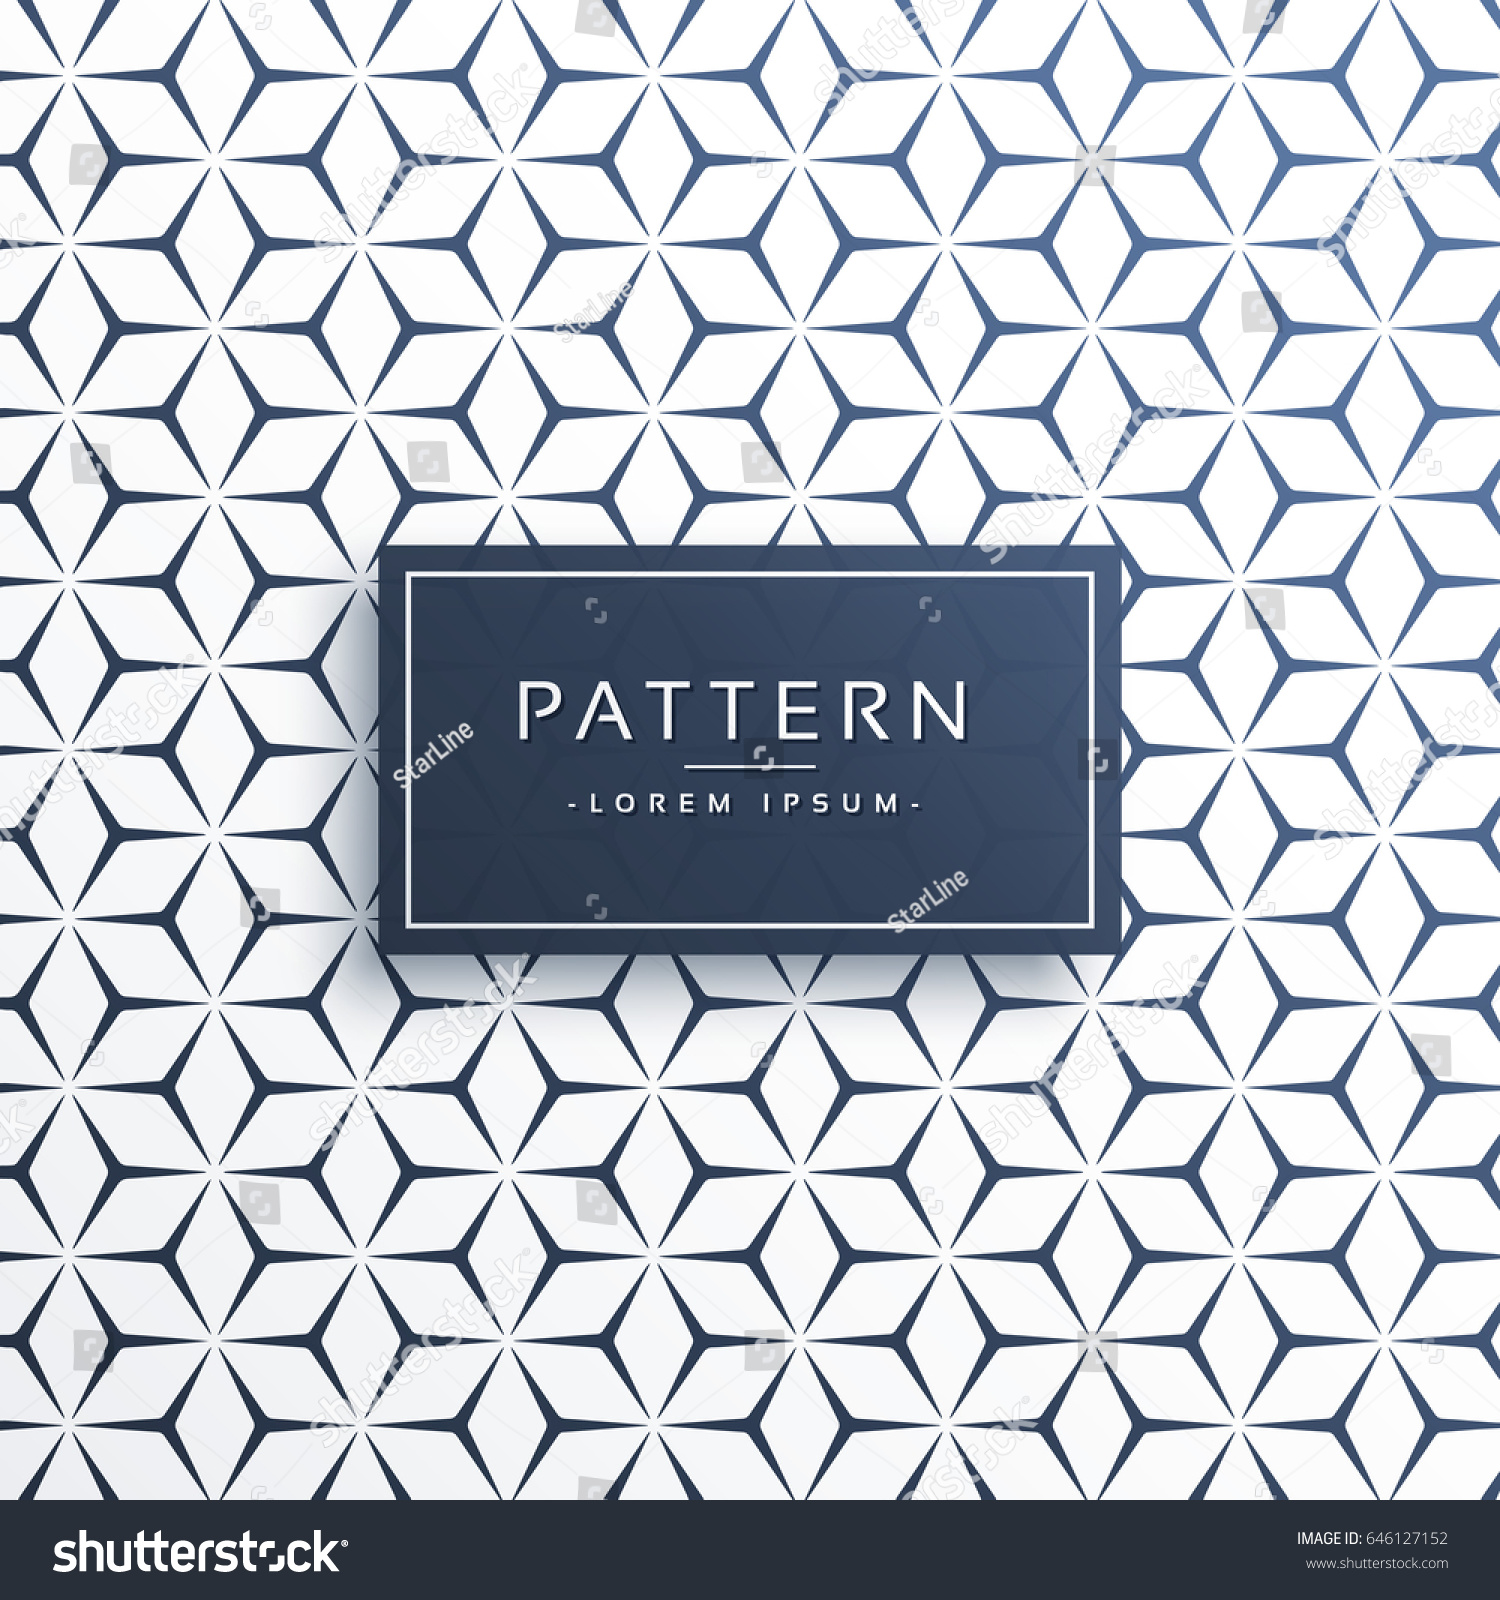 Clean Minimal Geometric Pattern Background Stock Photo (Photo ...